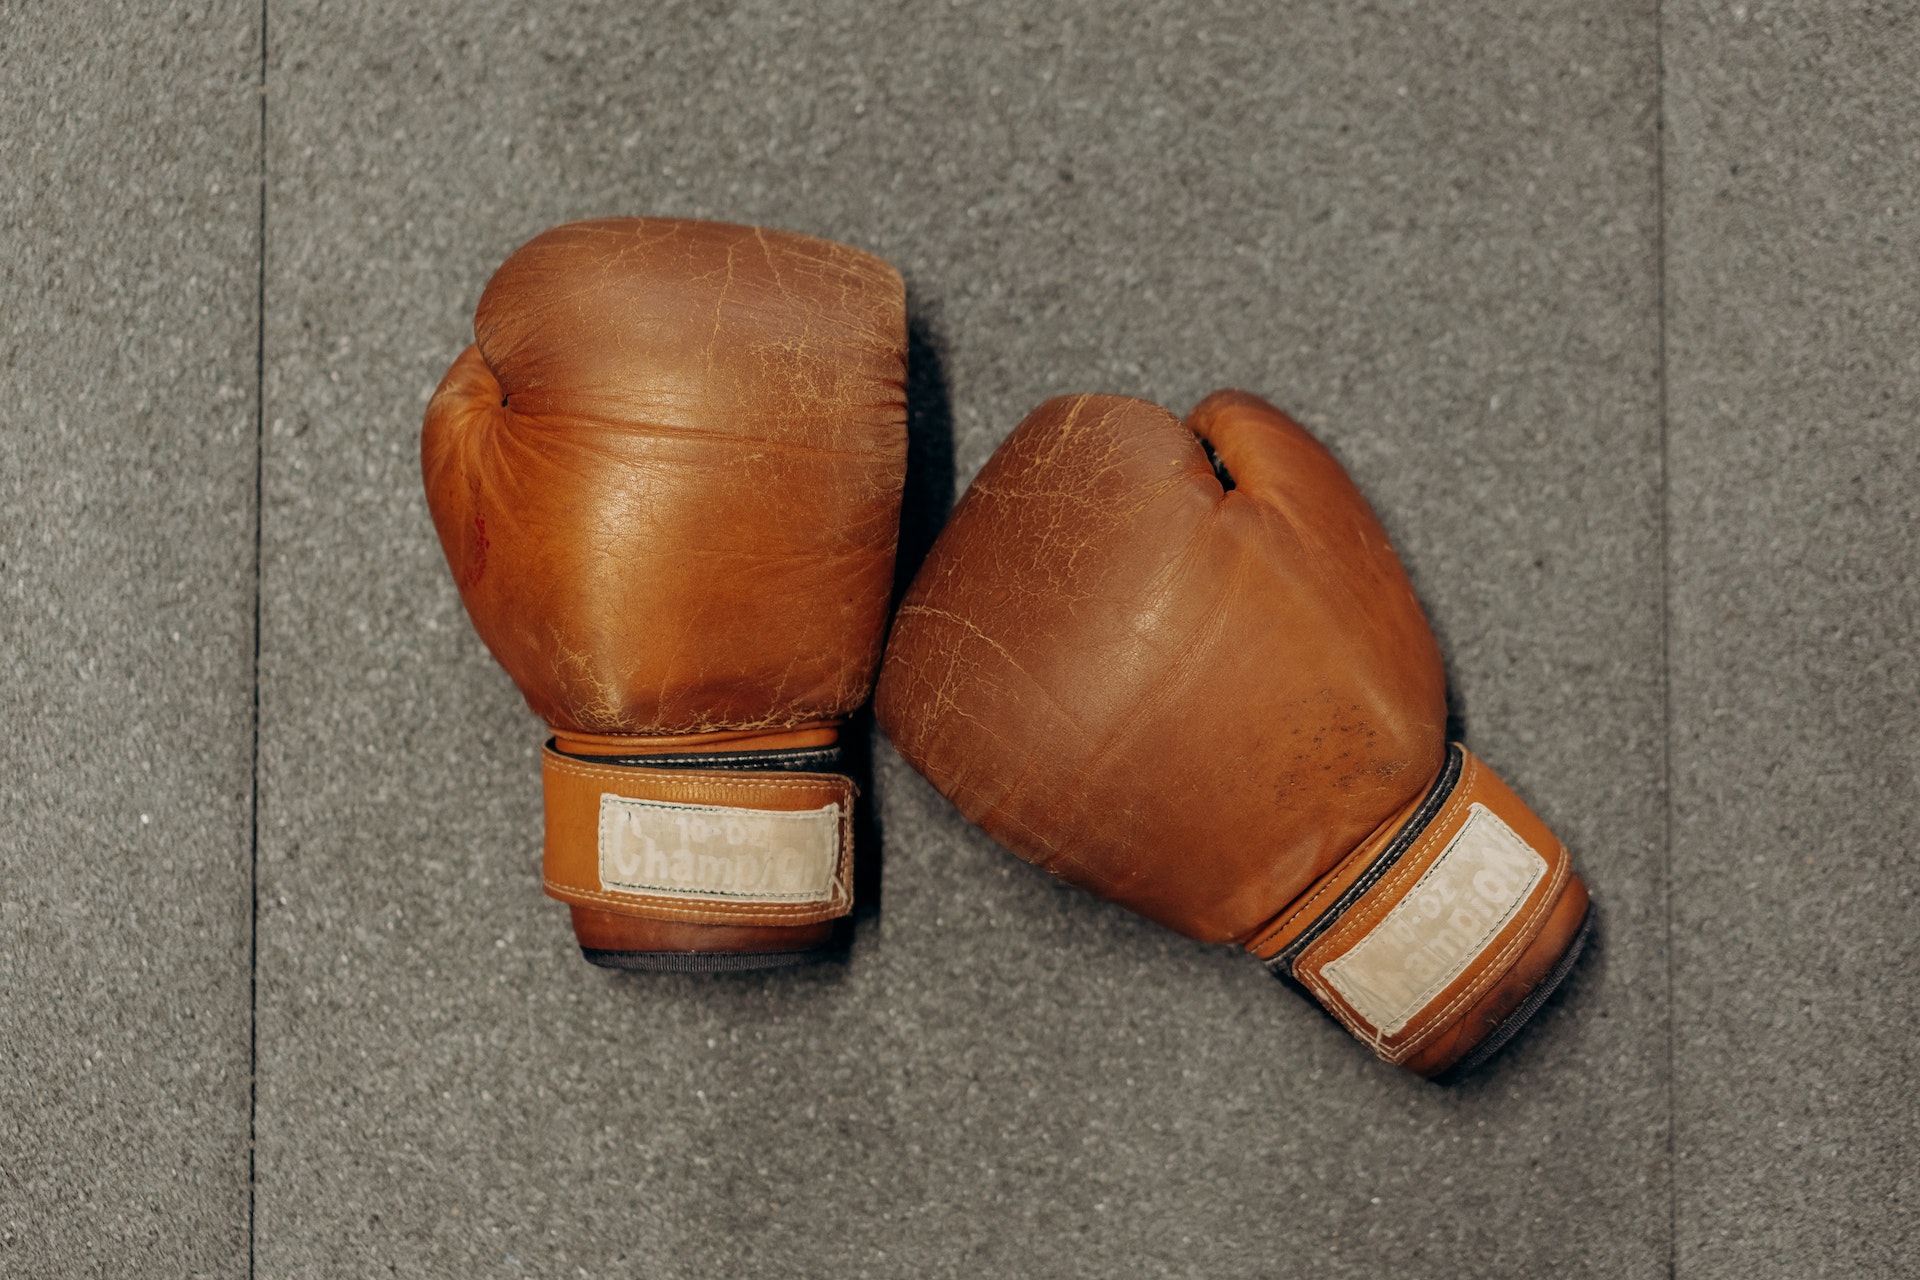 Boxing, Kickboxing, and Mixed Martial Arts (“MMA”) License Requirements